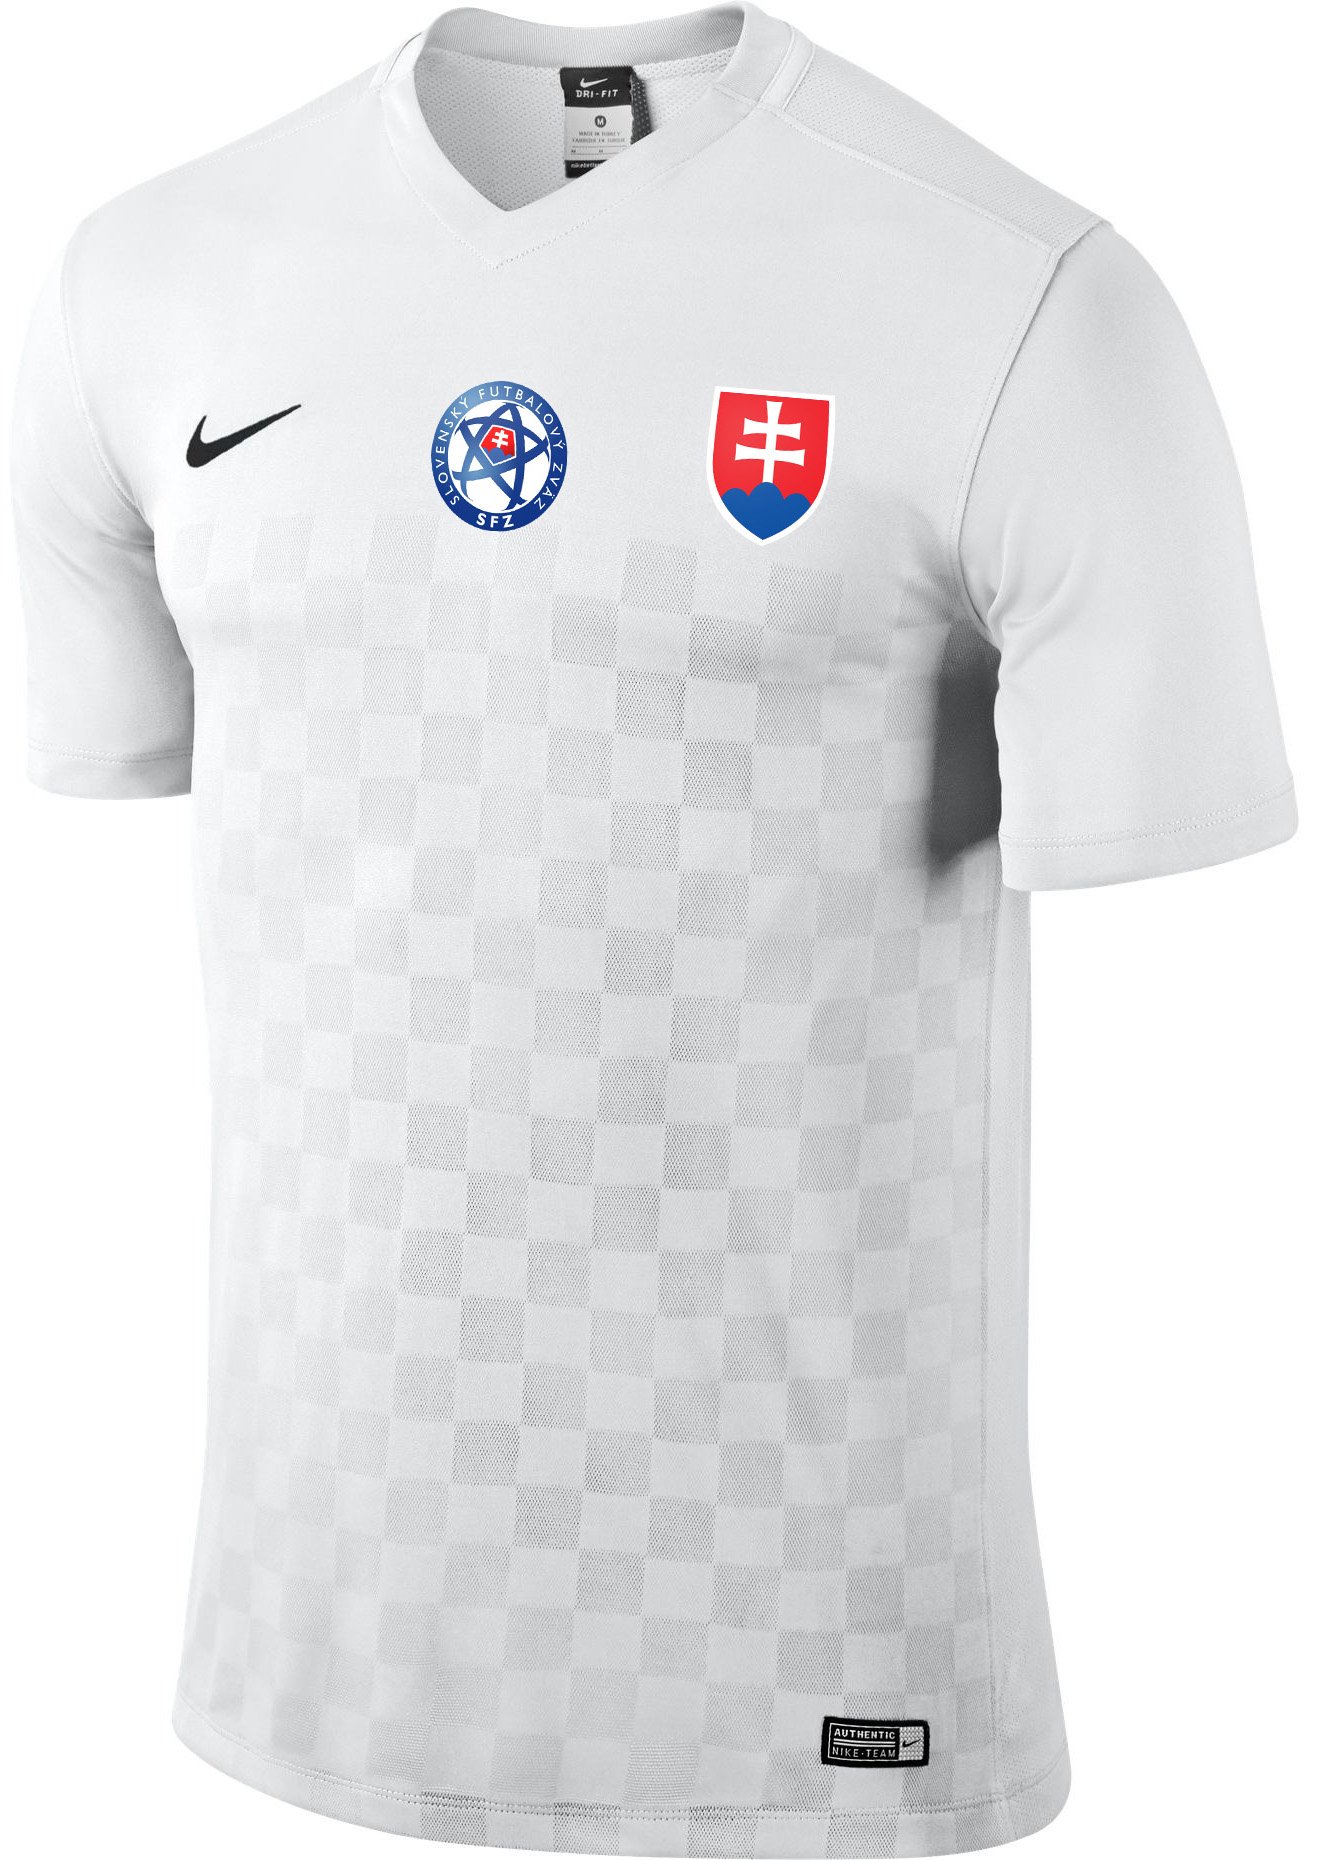 Shirt Nike Original Slovakia Republic Home Youth Jersey 2016/2017